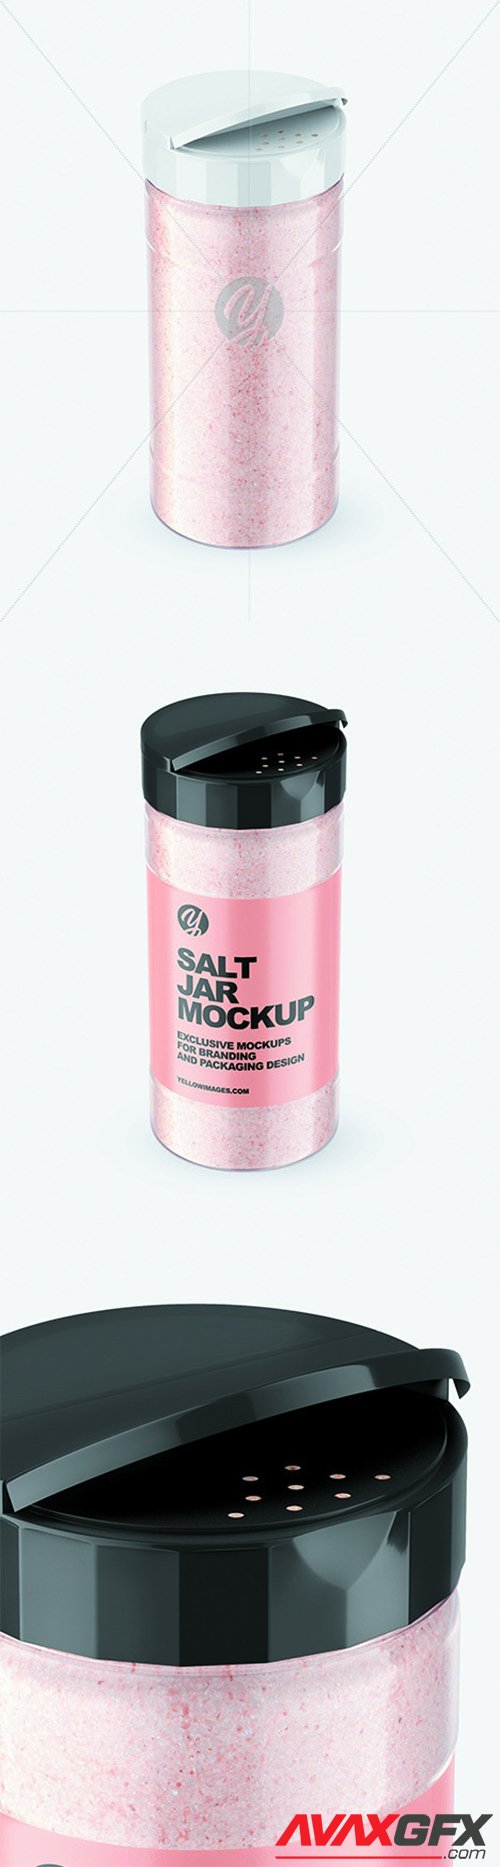 Glossy Clear Jar with Pink Salt Mockup 68706